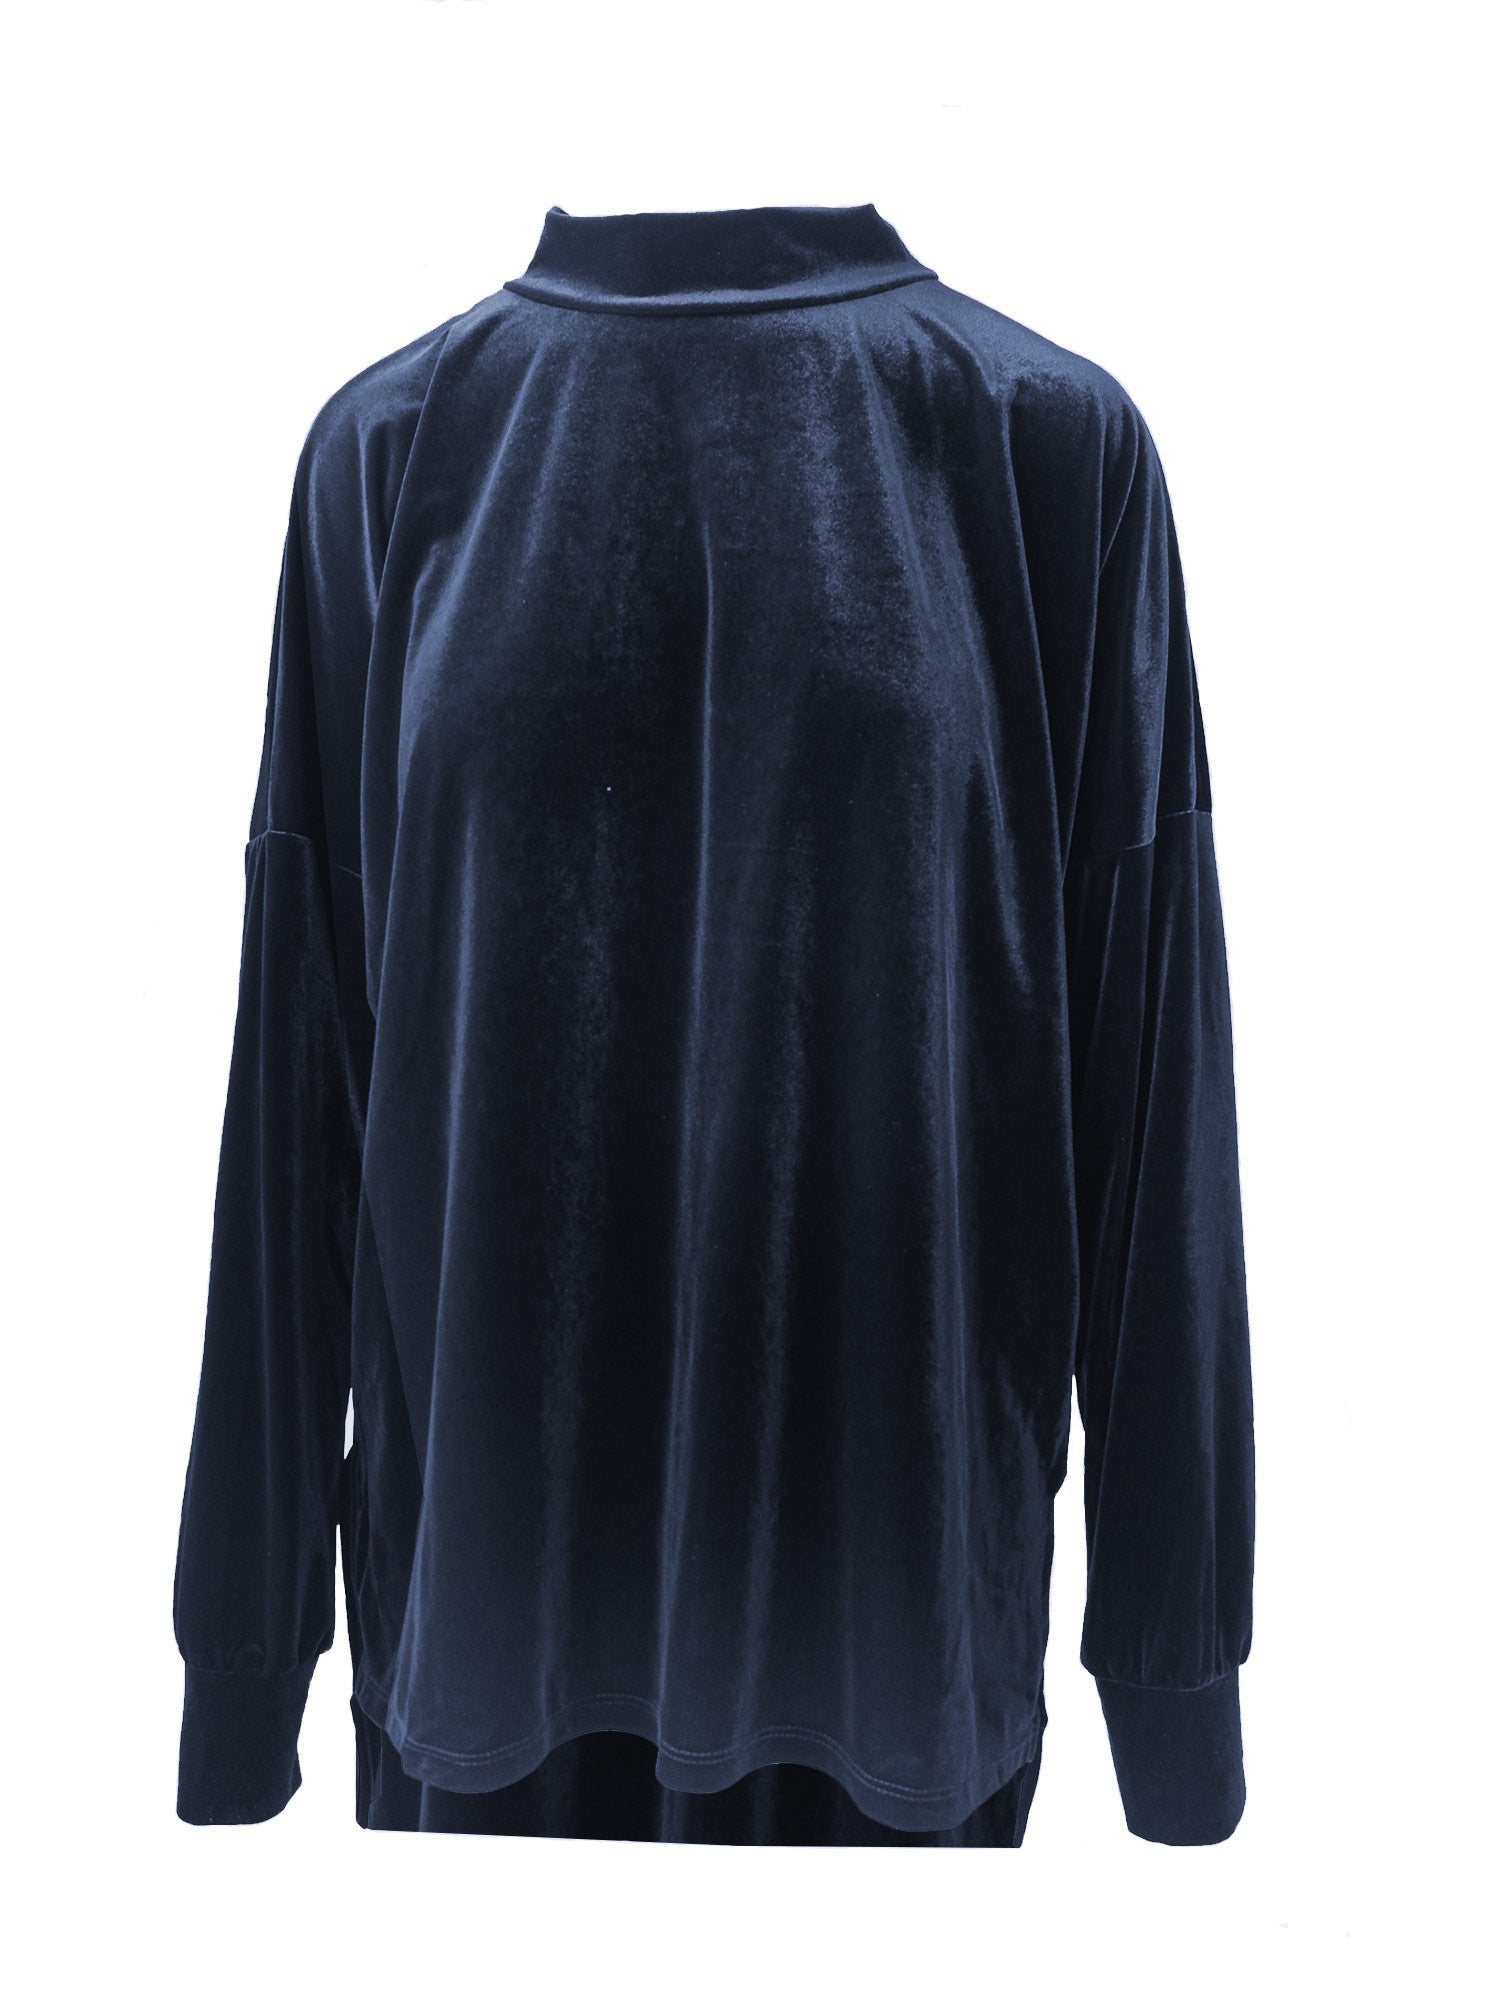 FLORENCE - blue chenille sweatshirt